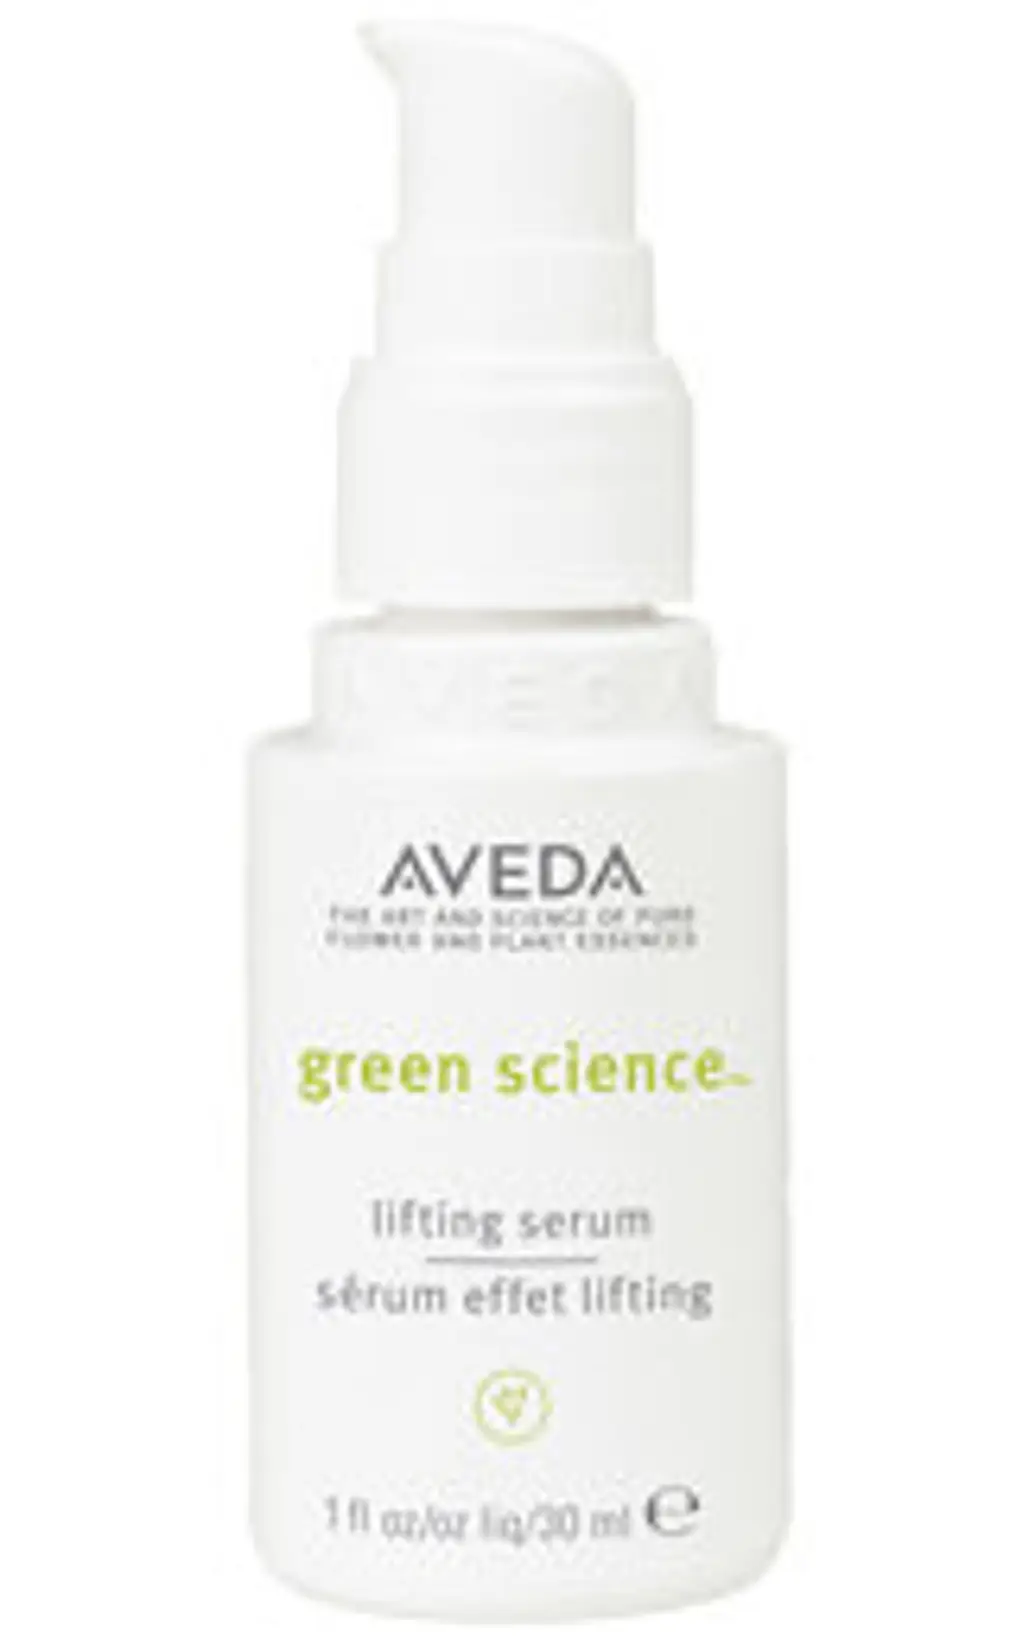 Aveda Green ScienceTM Lifting Serum